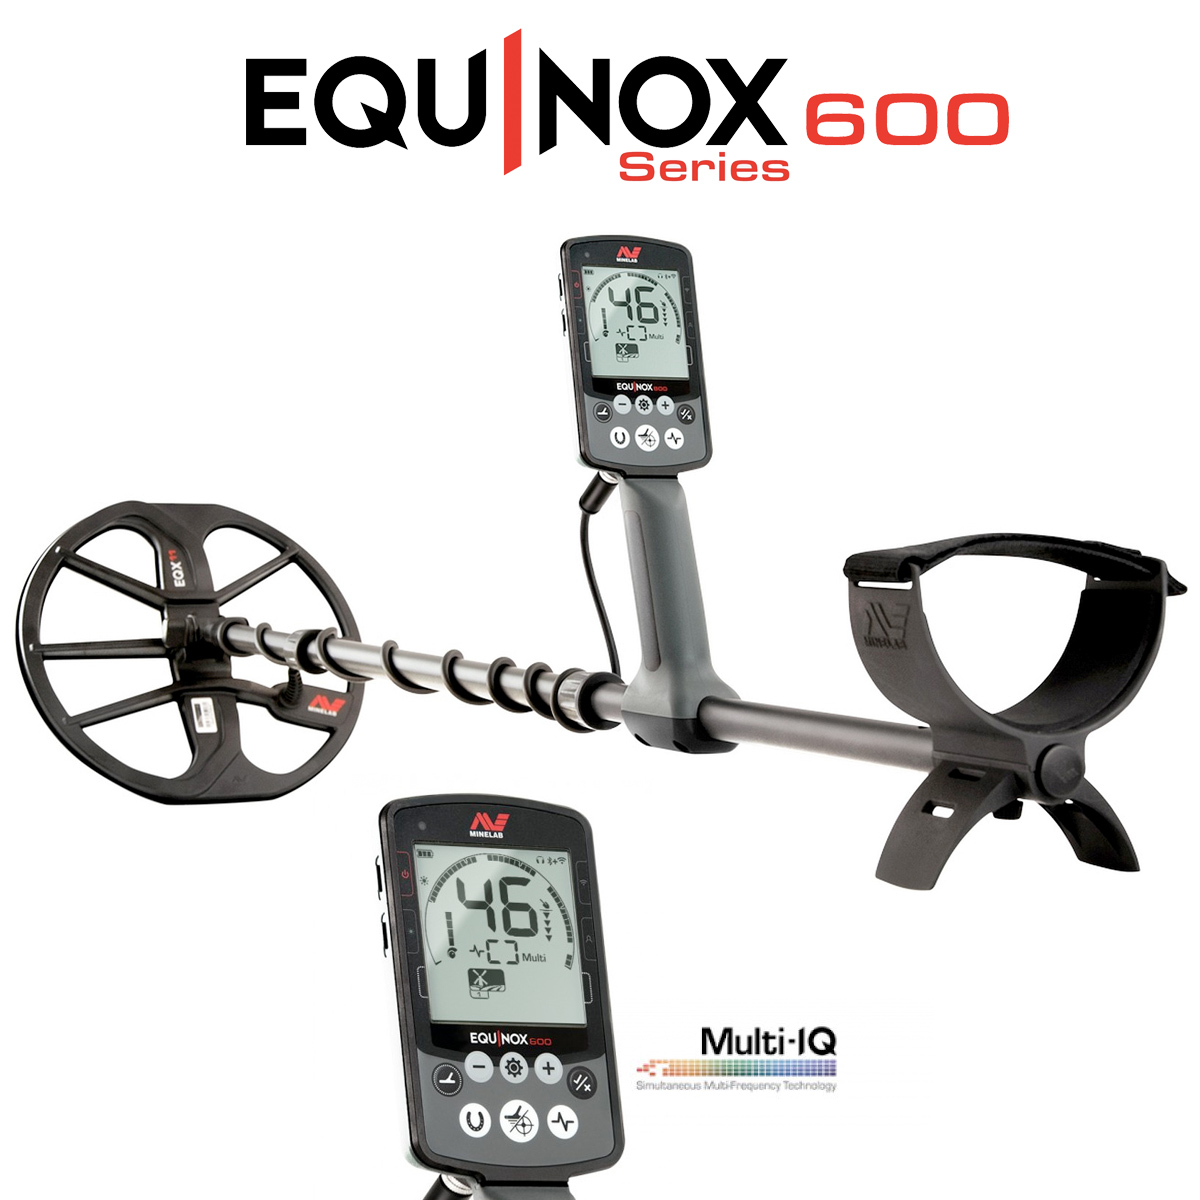 Minelab Equinox 600 Multi-IQ Metal Detector Bundle with Minelab 15